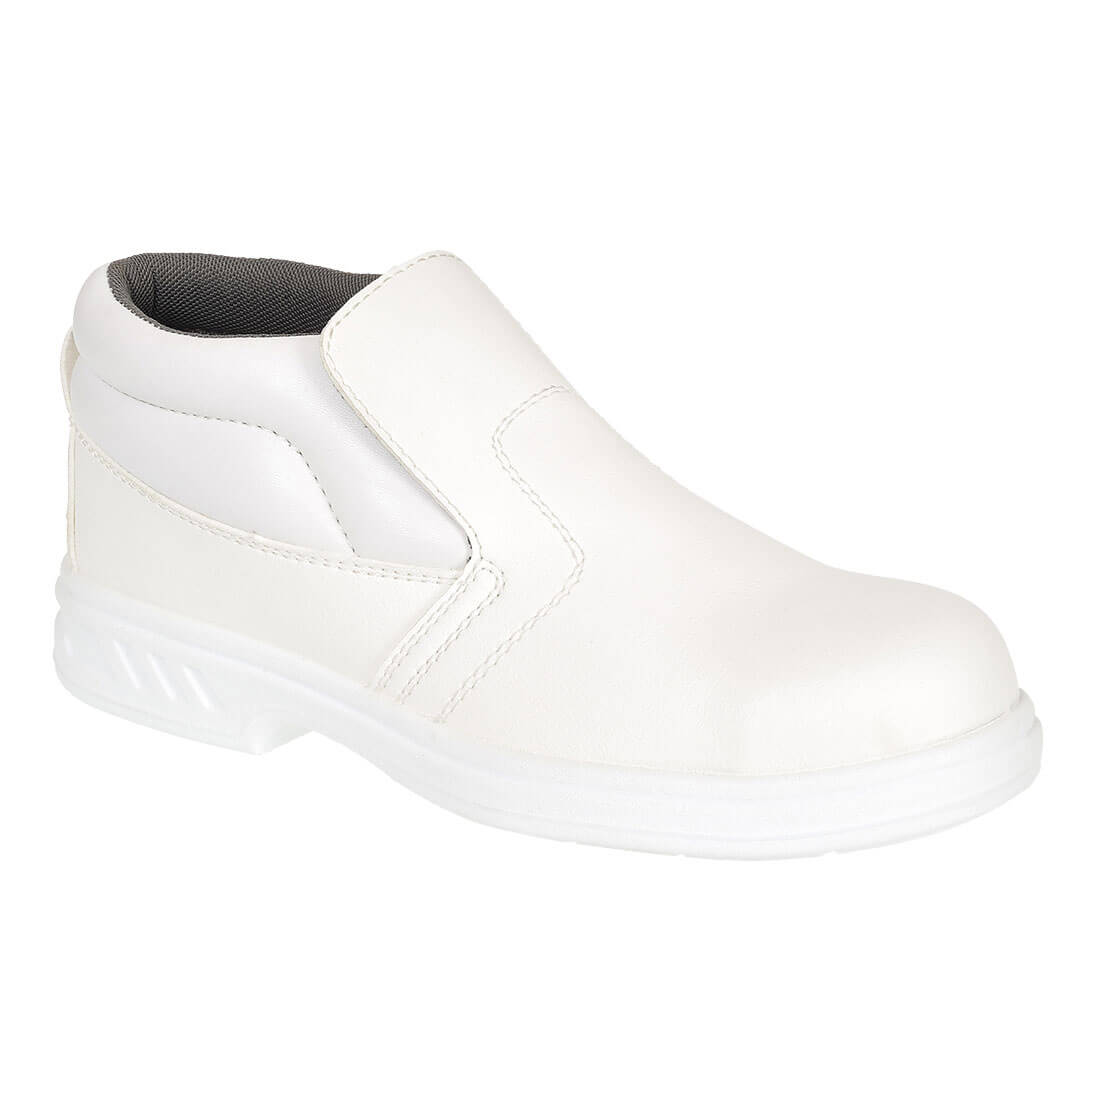 Portwest Steelite Slip On S2 Clean Area Safety Boots White Size 7